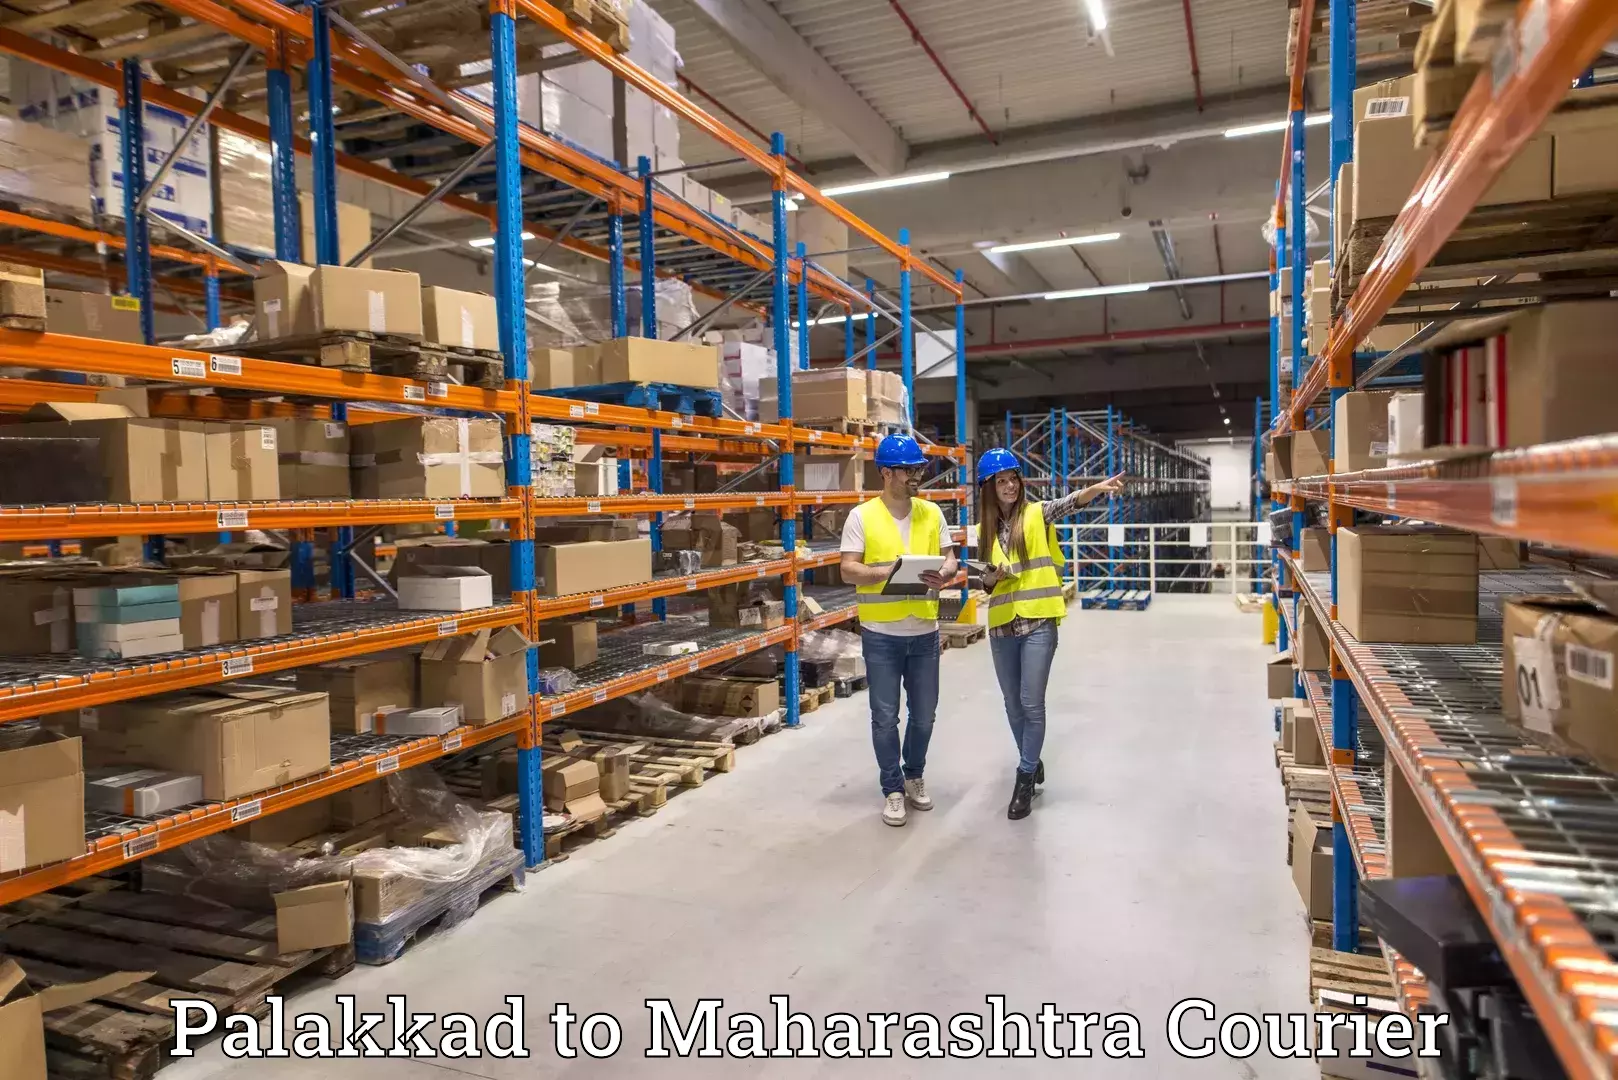 Global logistics network Palakkad to Morshi